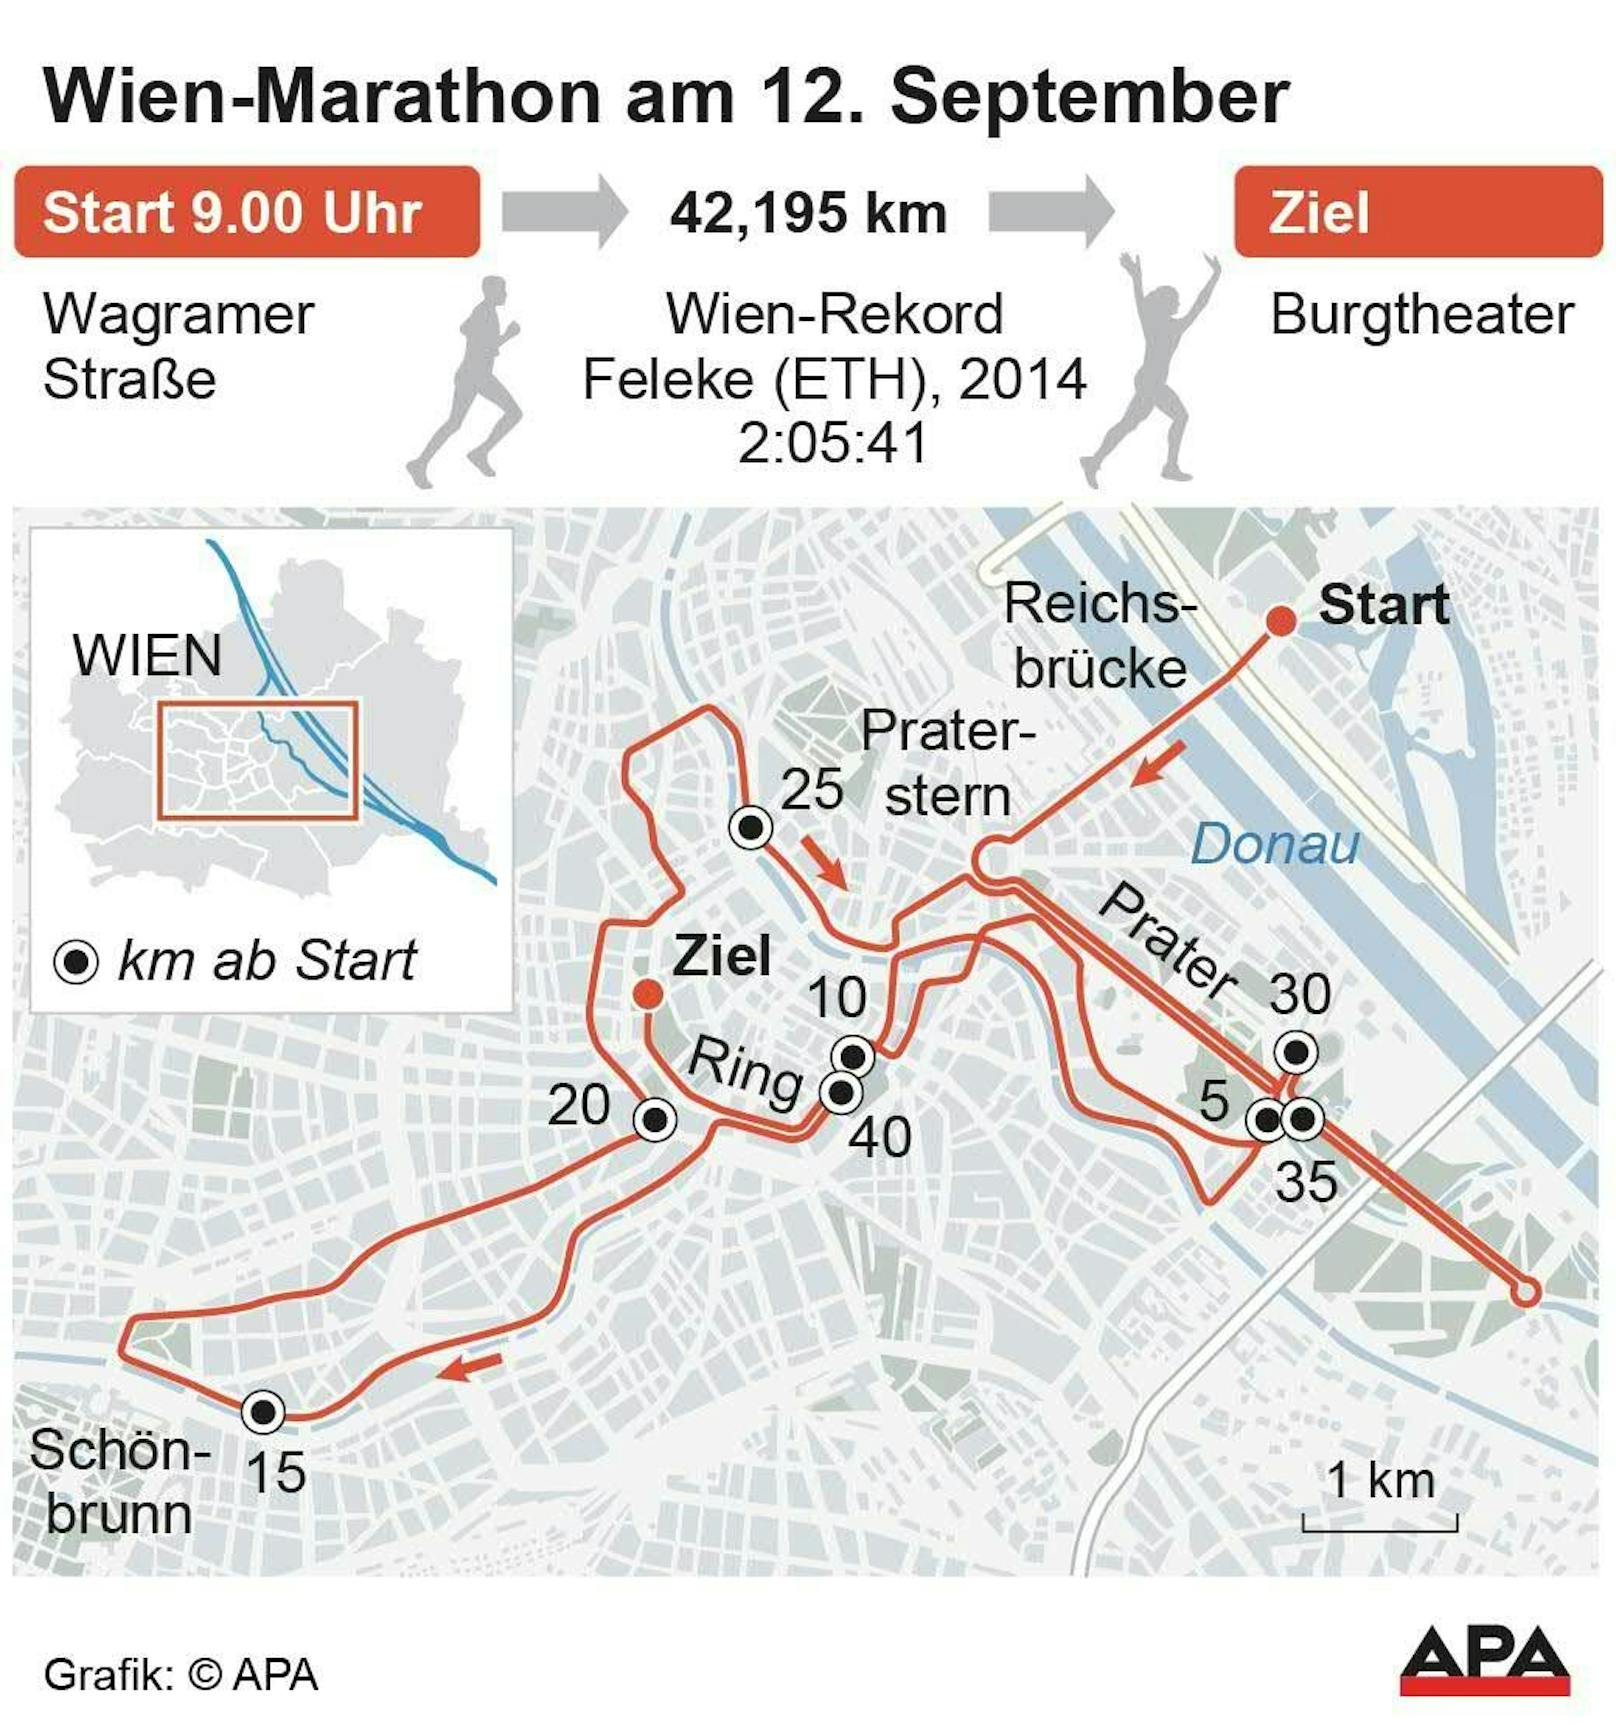 Wien-Marathon am 12. September